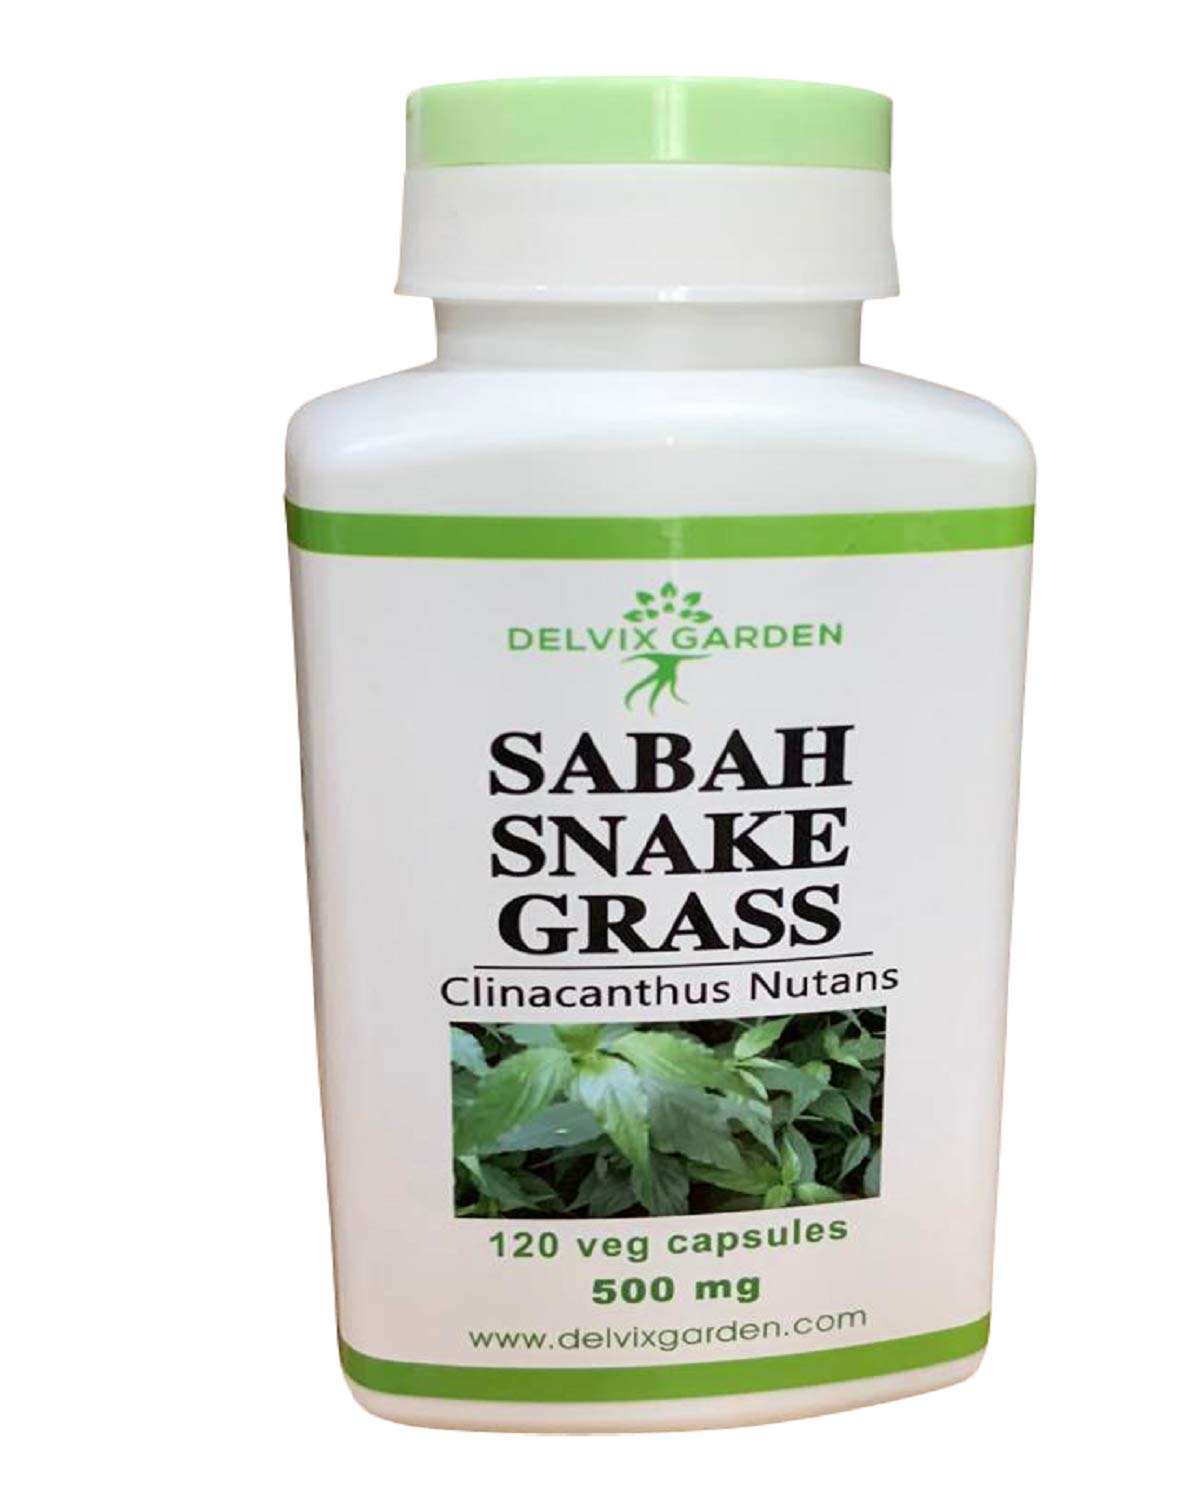 Sabah snake grass from Delvix Garden capsules